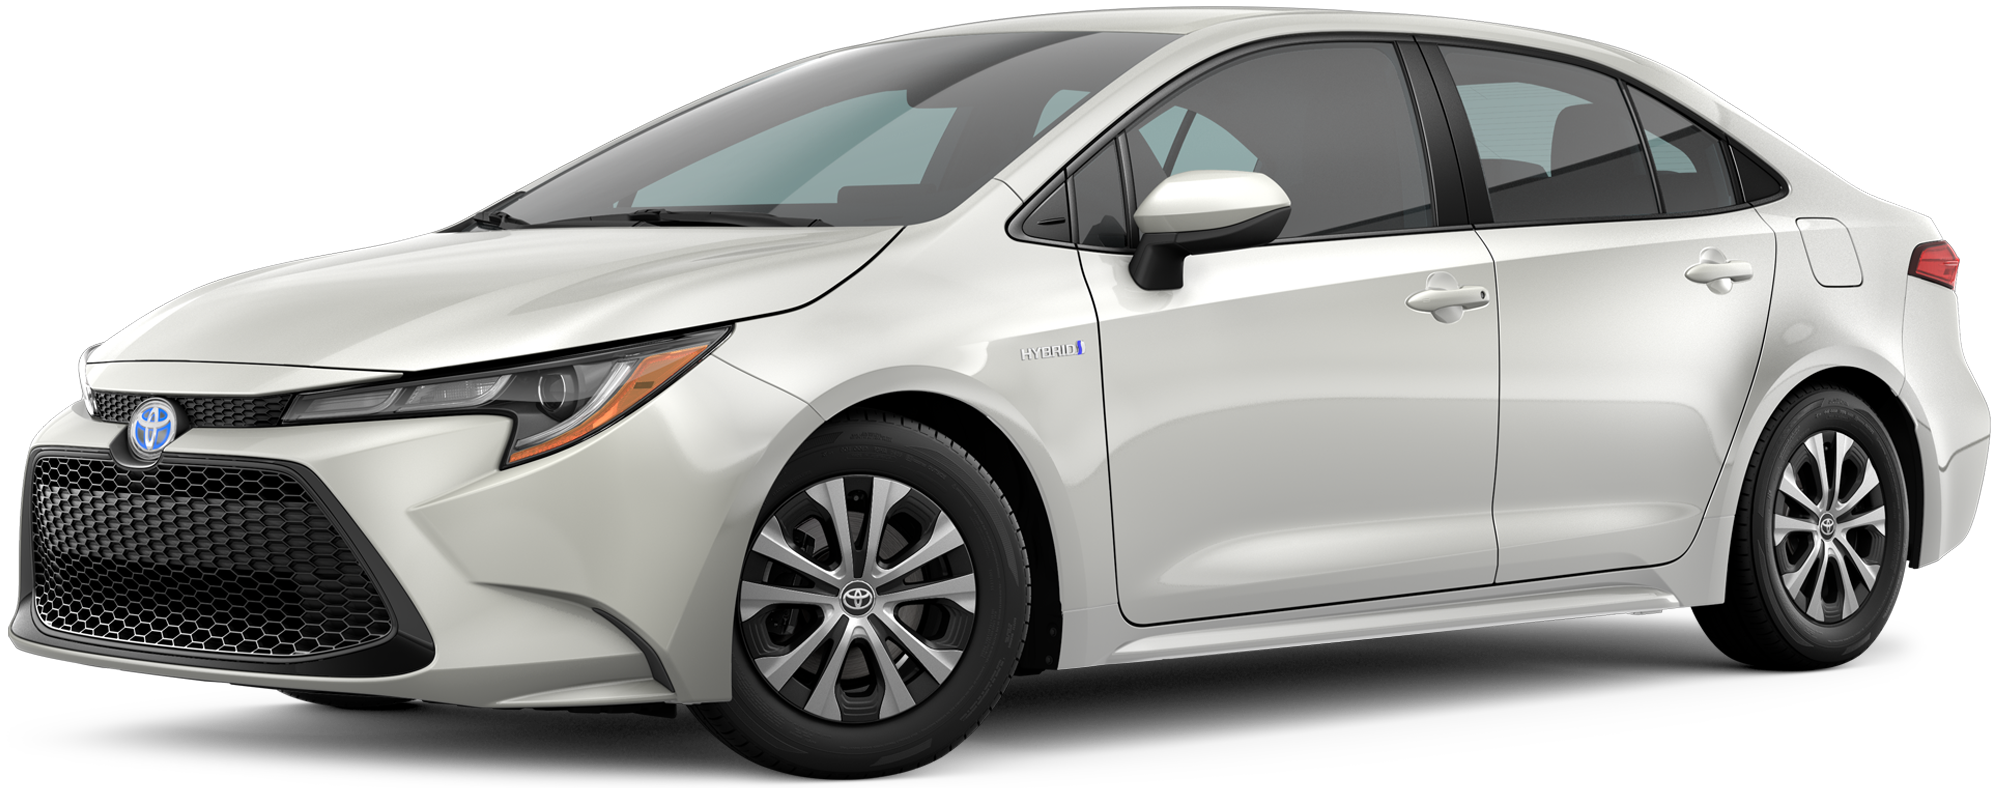 2020 Toyota Corolla Hybrid Sedan